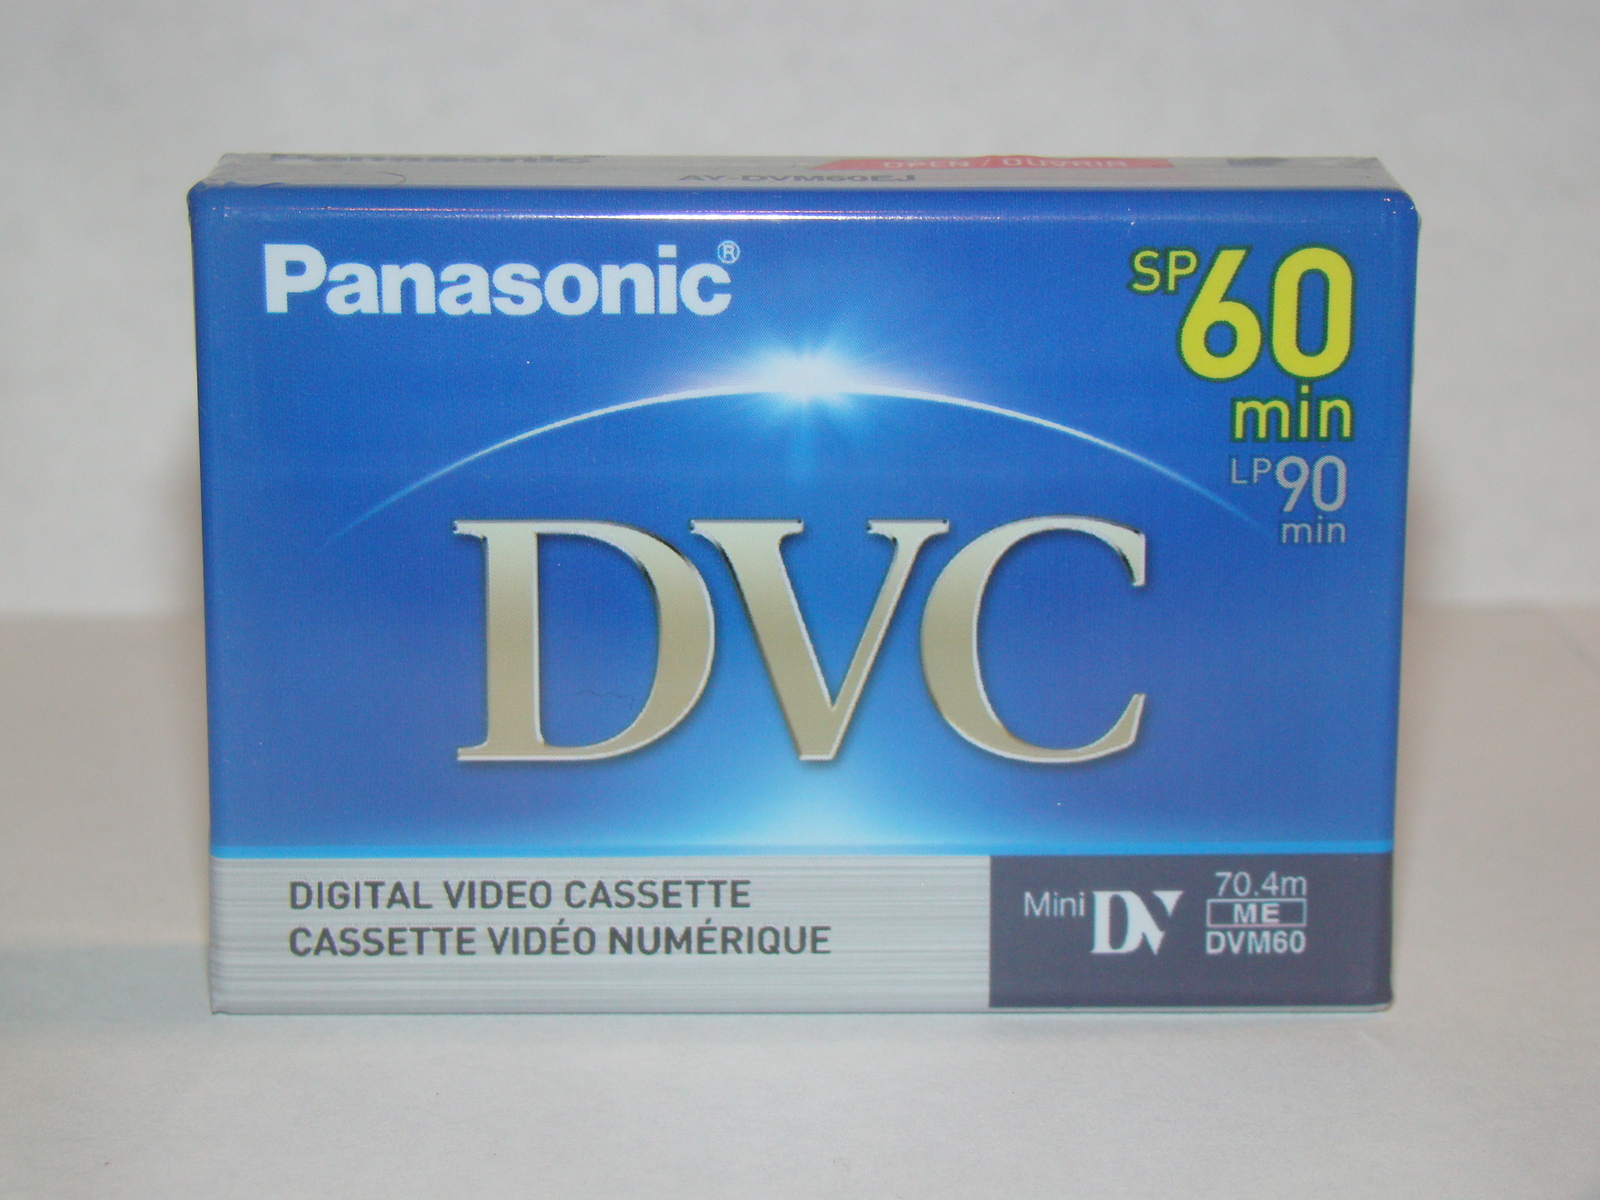 Primary image for Panasonic DVC (Mini DV) Digital Video Cassette SP 60 Min LP 90 Min (New)